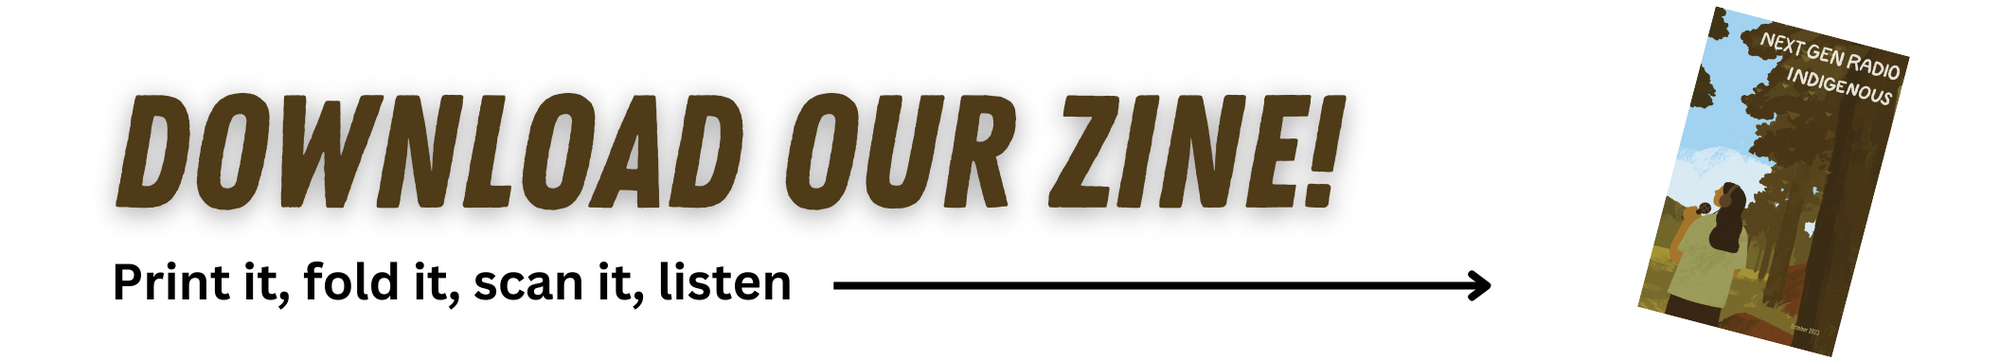 Download our zine.